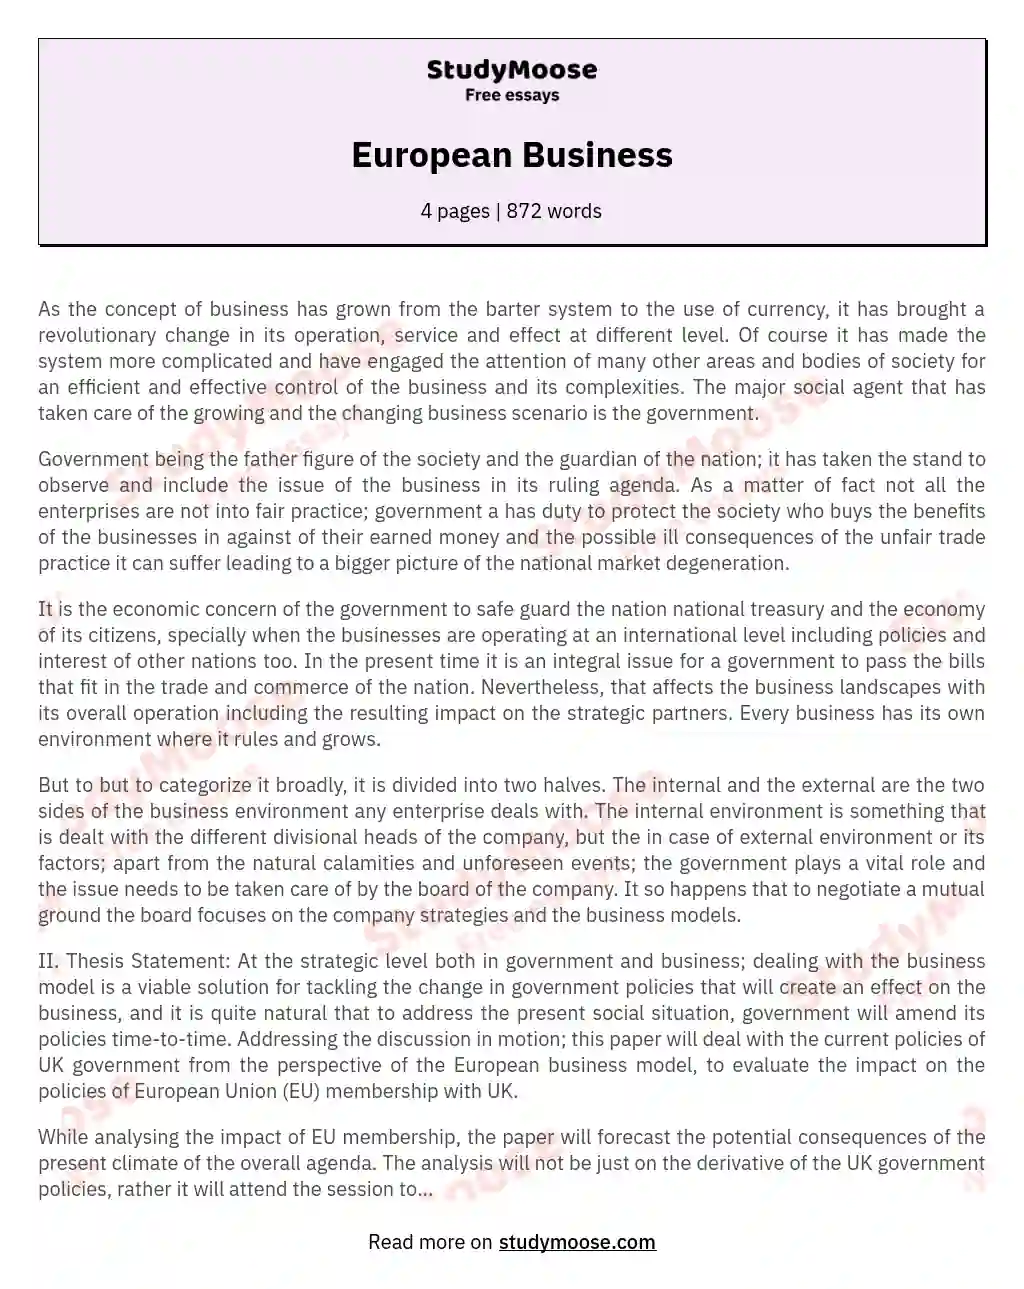 European Business essay